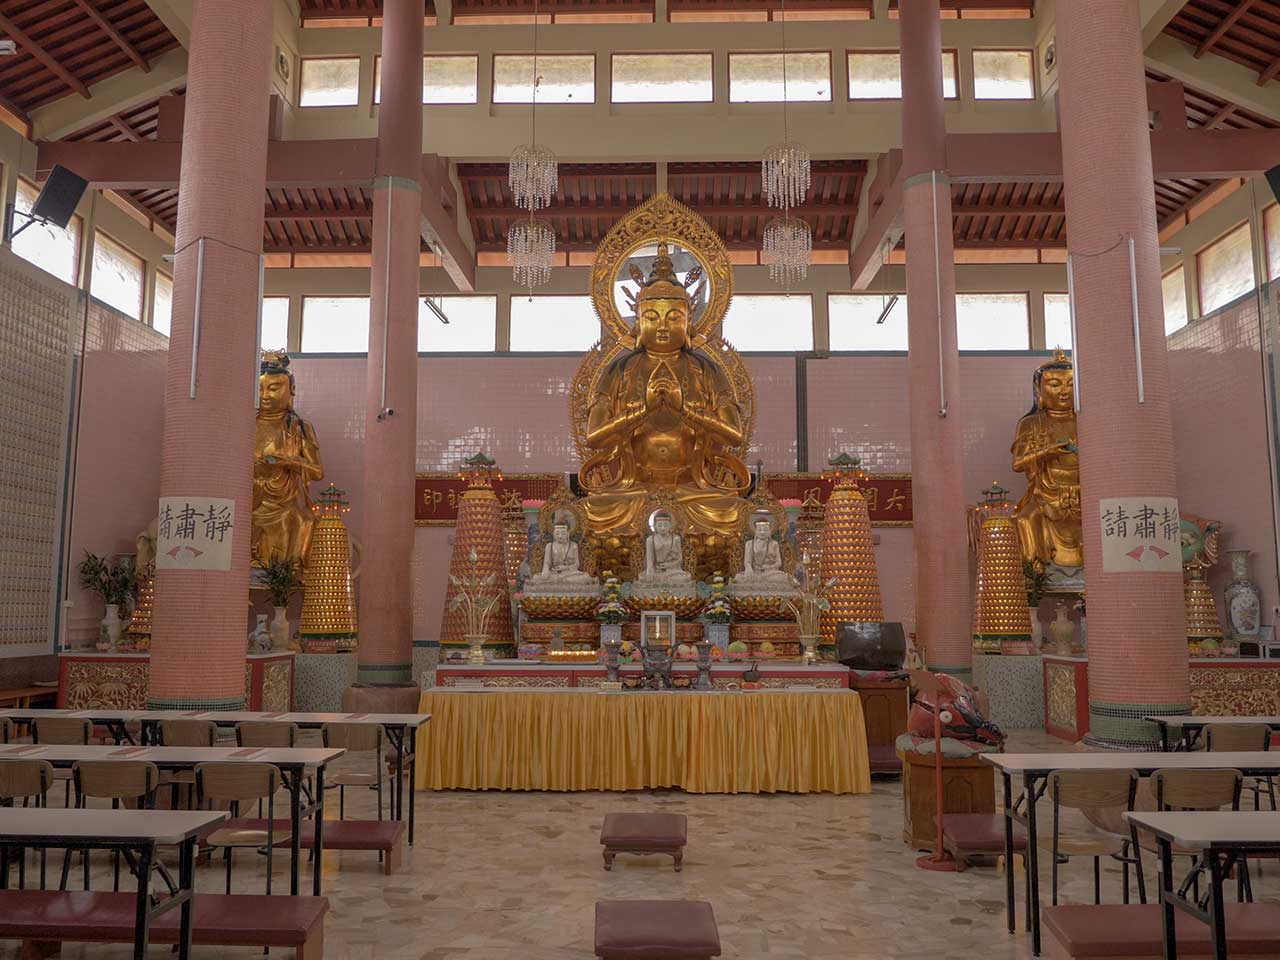 Sam Poh Tempel in den Cameron Highlands: Goldene Statuen